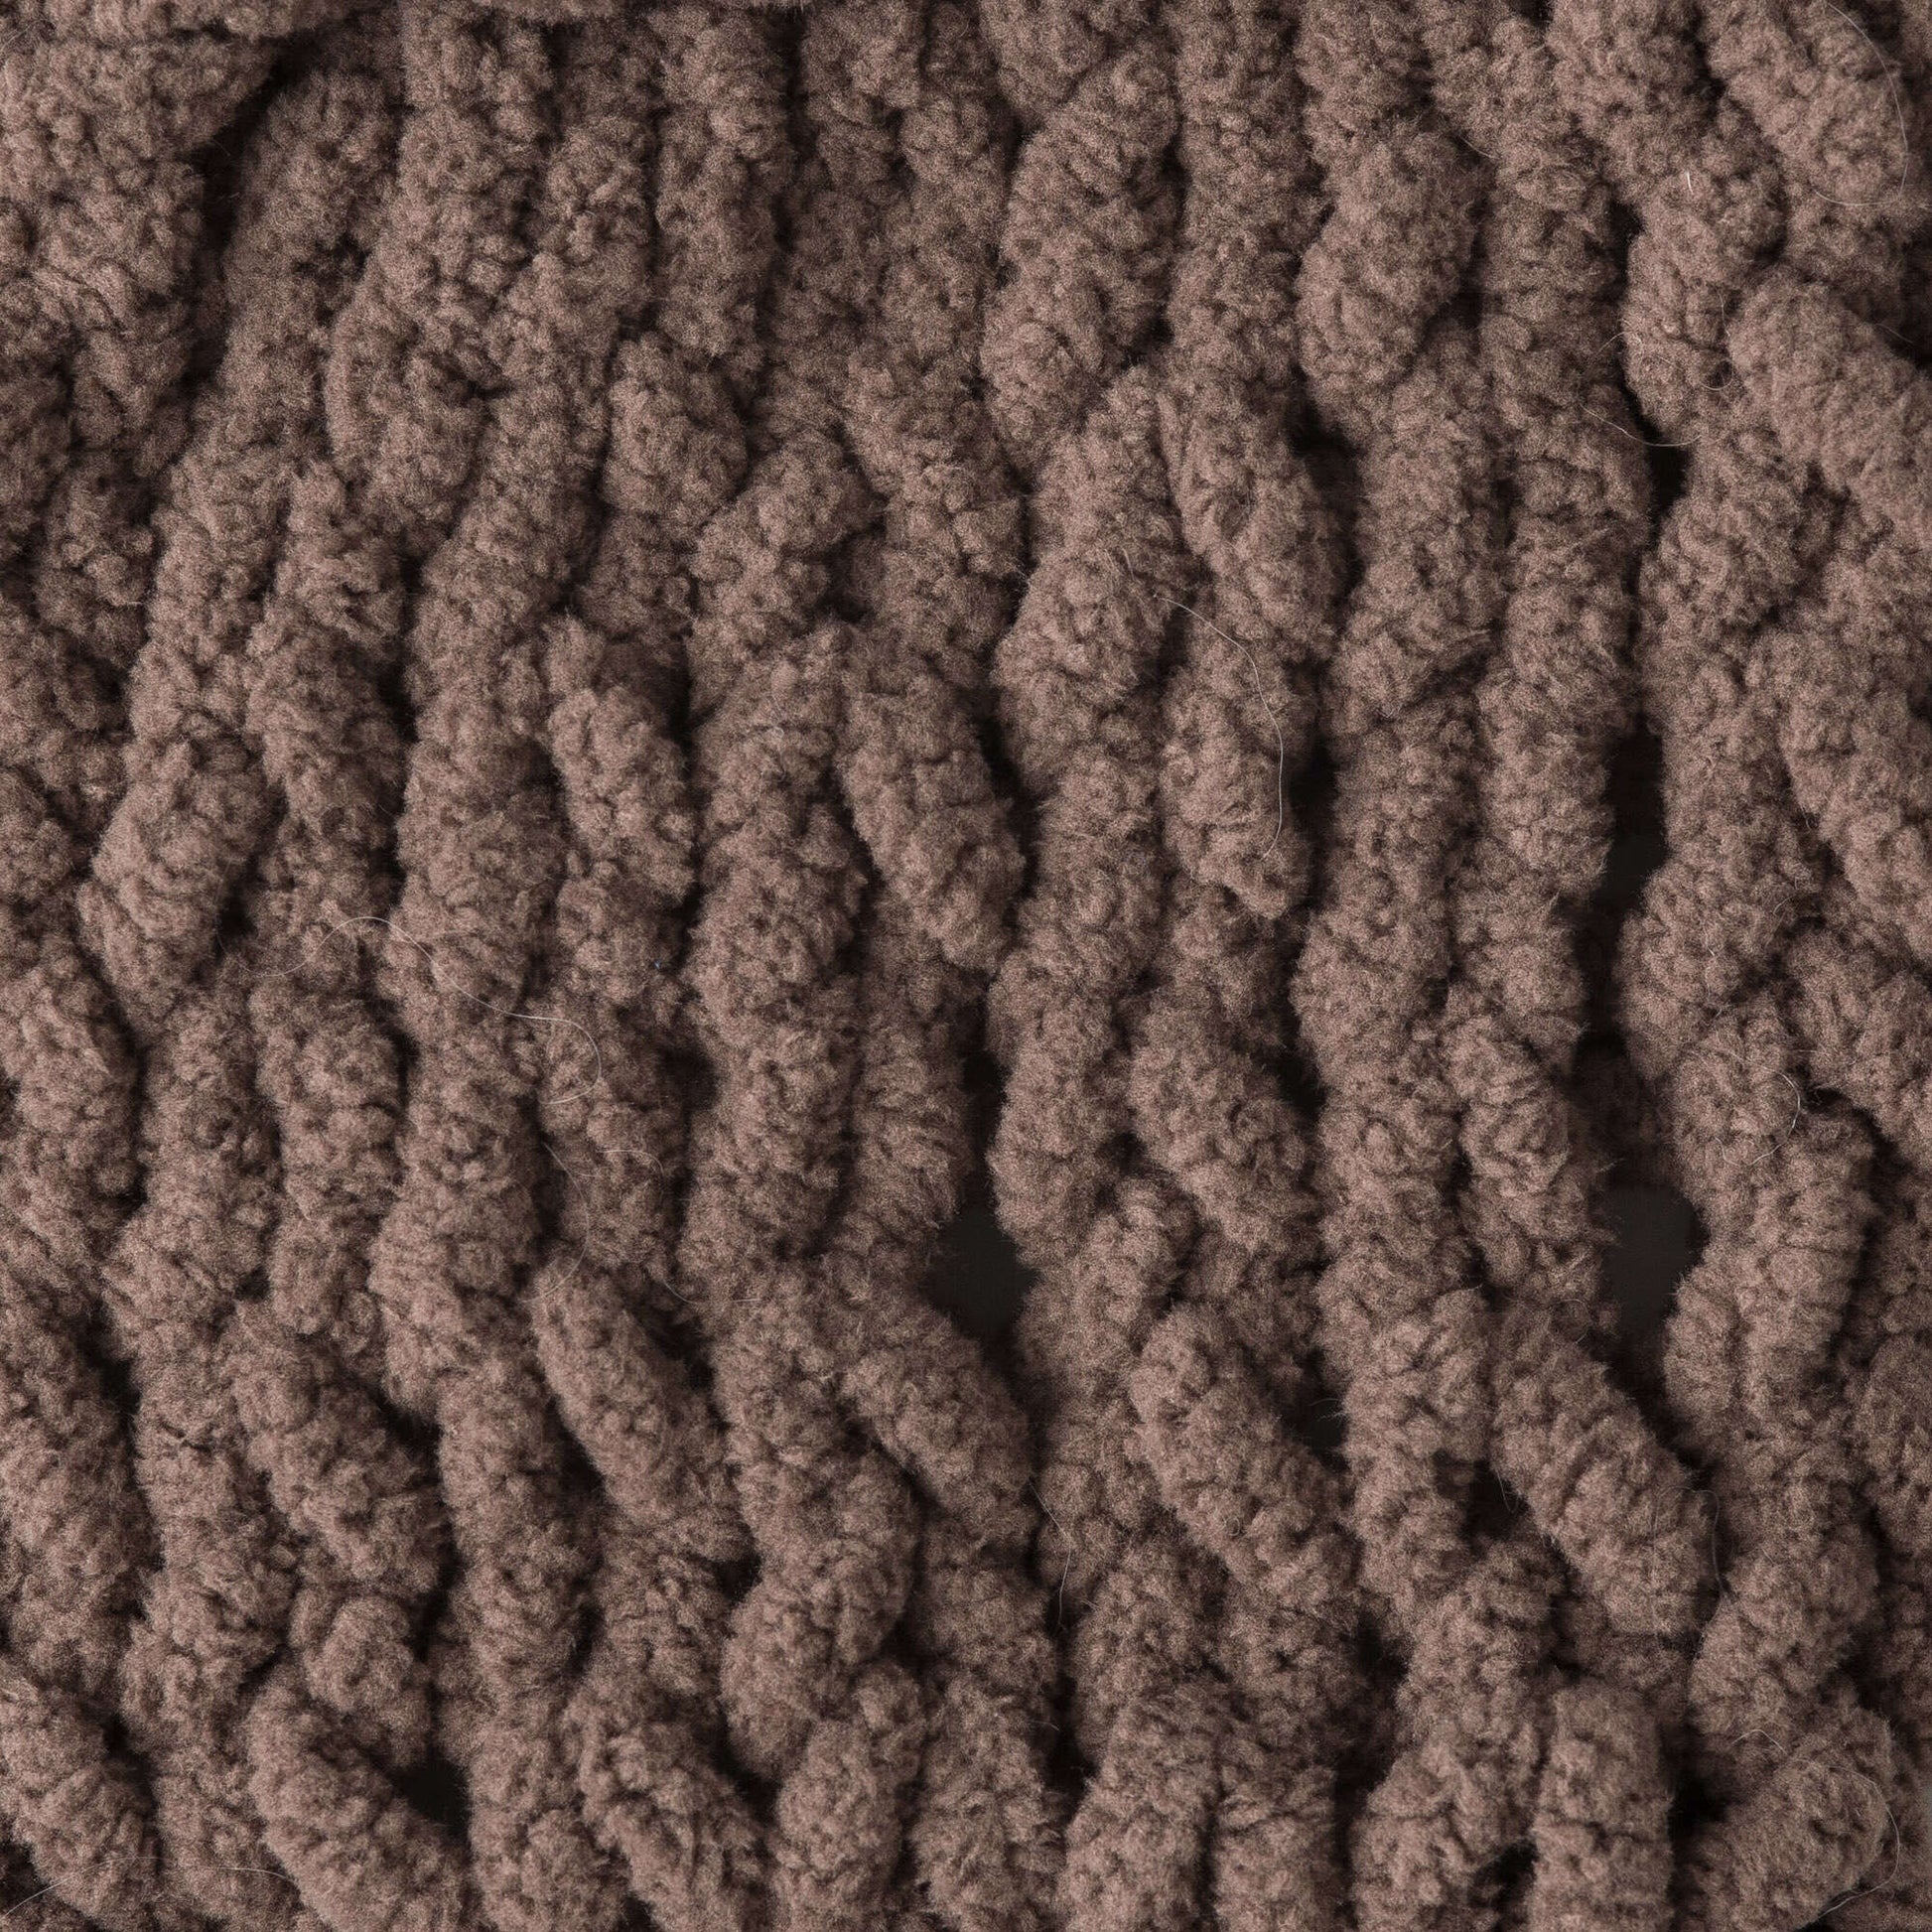 Bernat Blanket Yarn (300g/10.5oz) Taupe